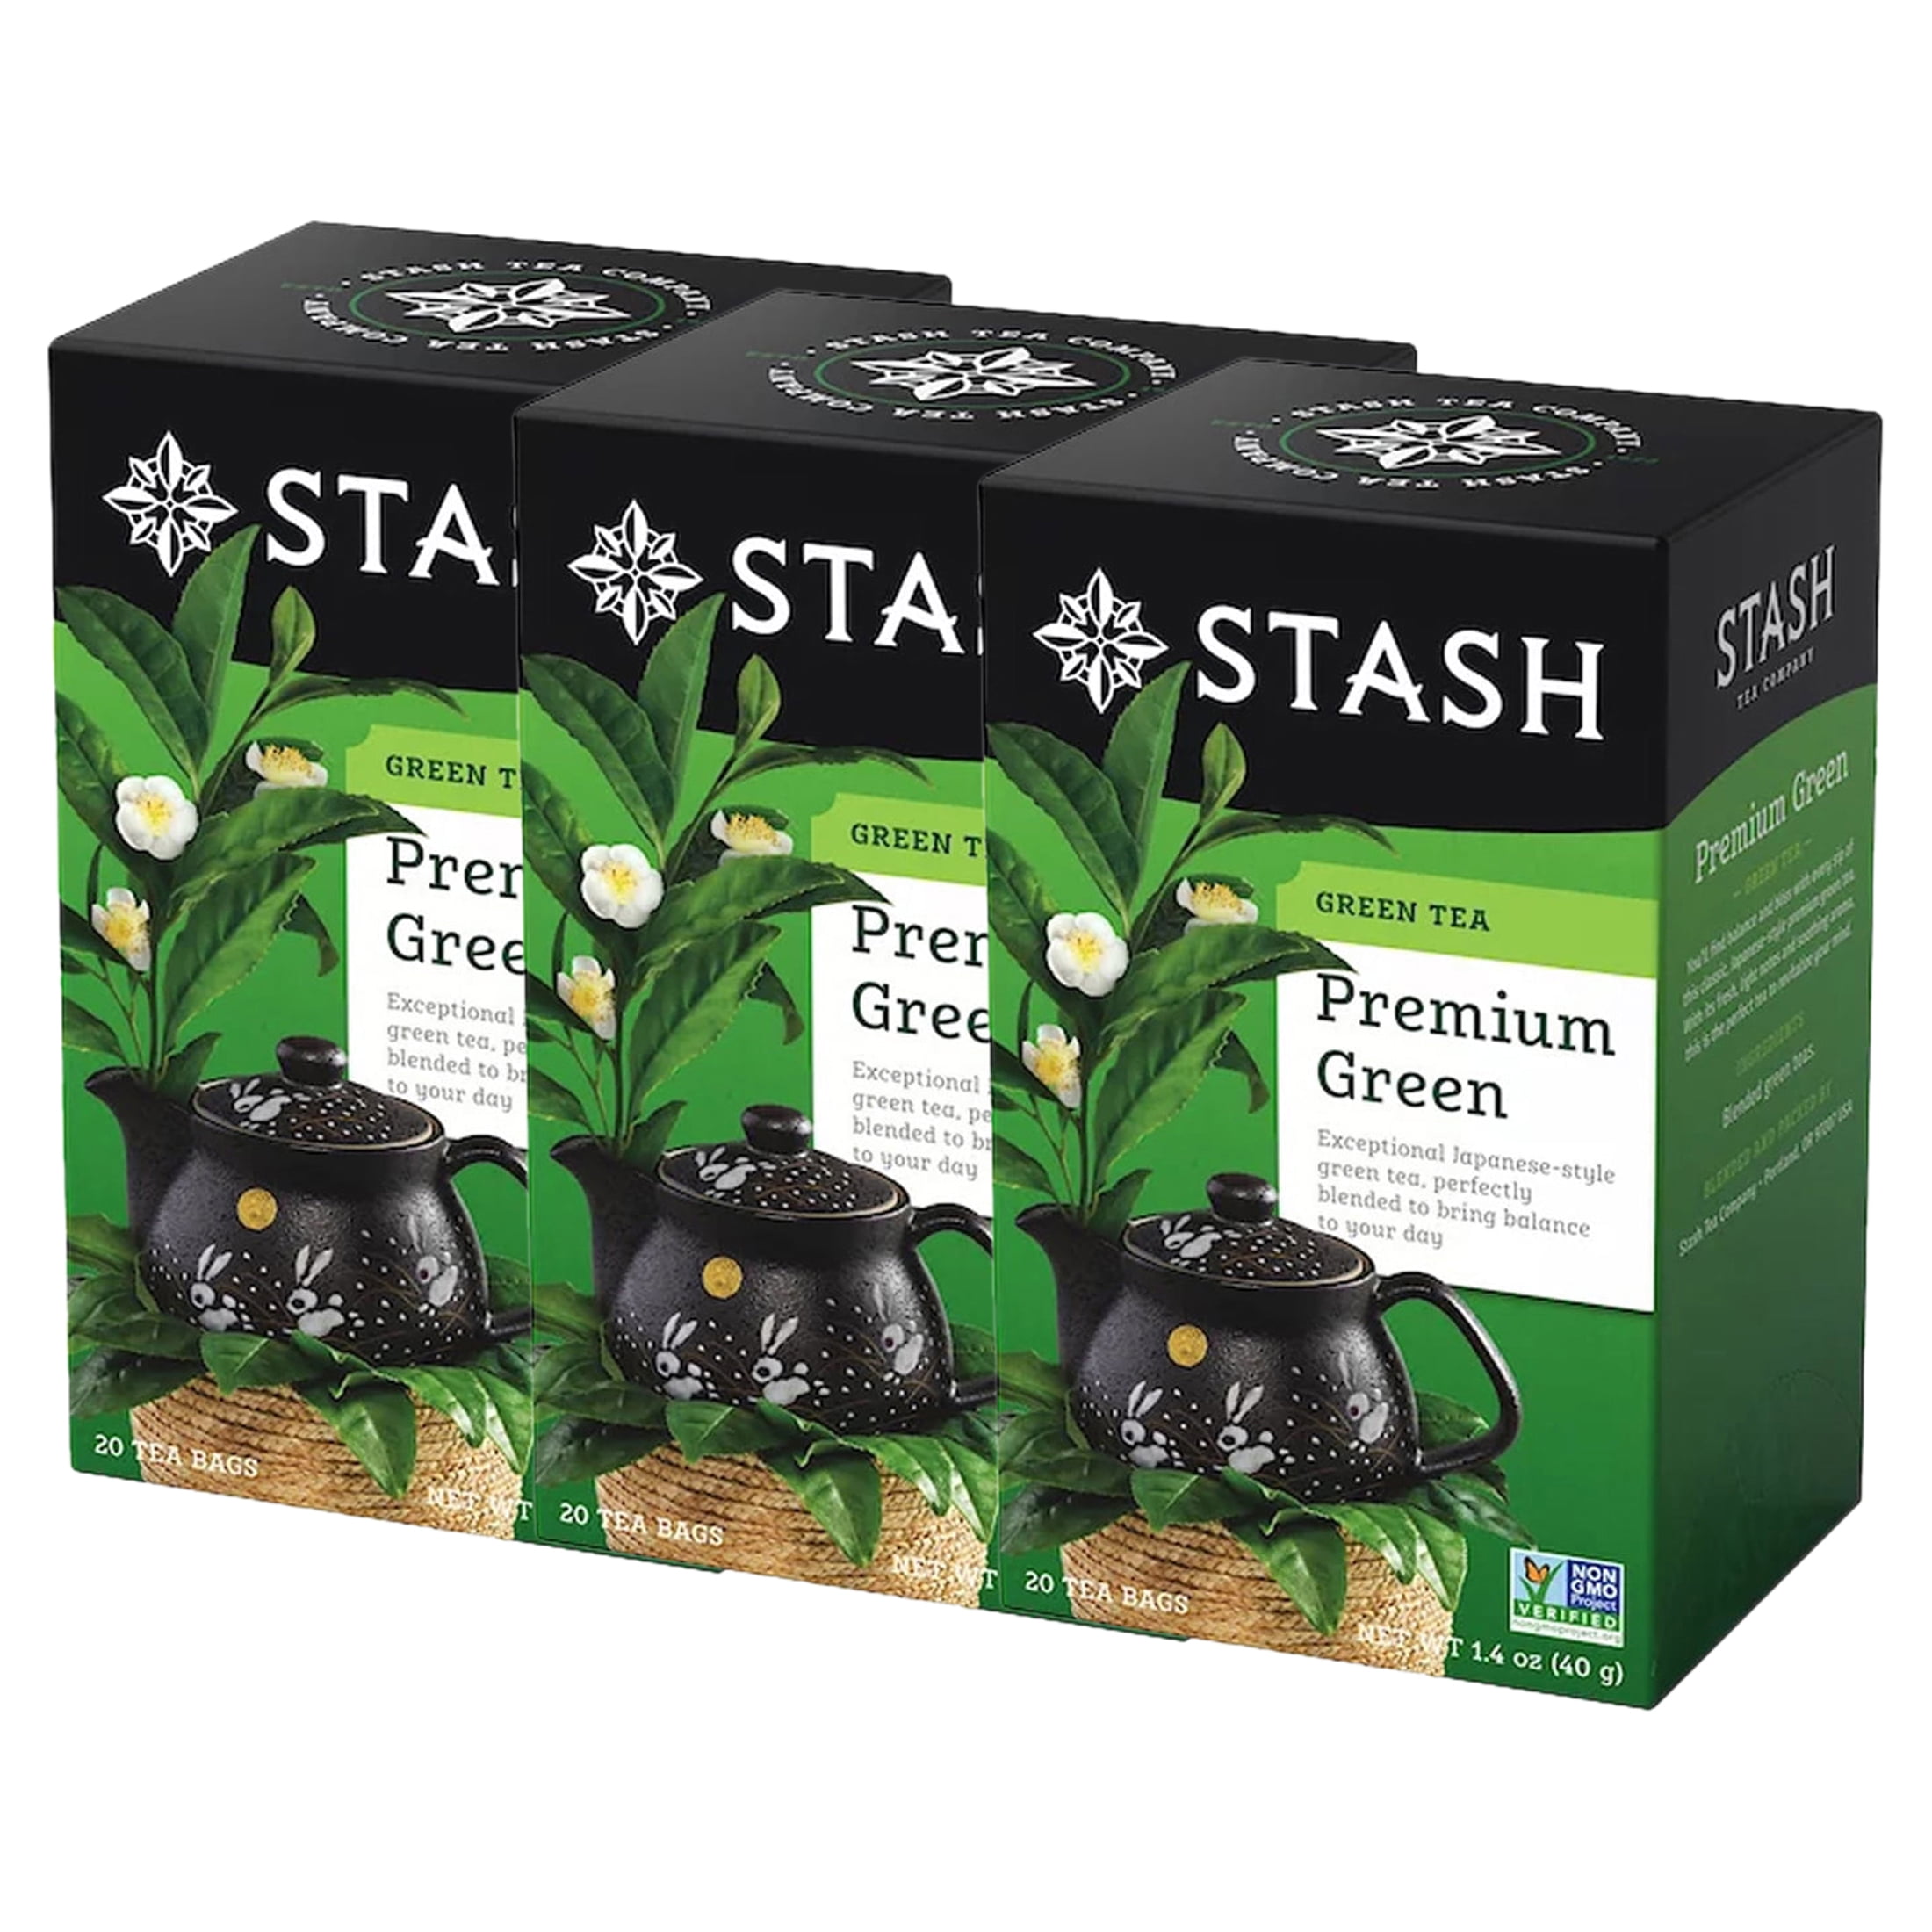 Prince Of Peace Organic Green Tea Jasmine  100 Tea Bags  Walmartcom